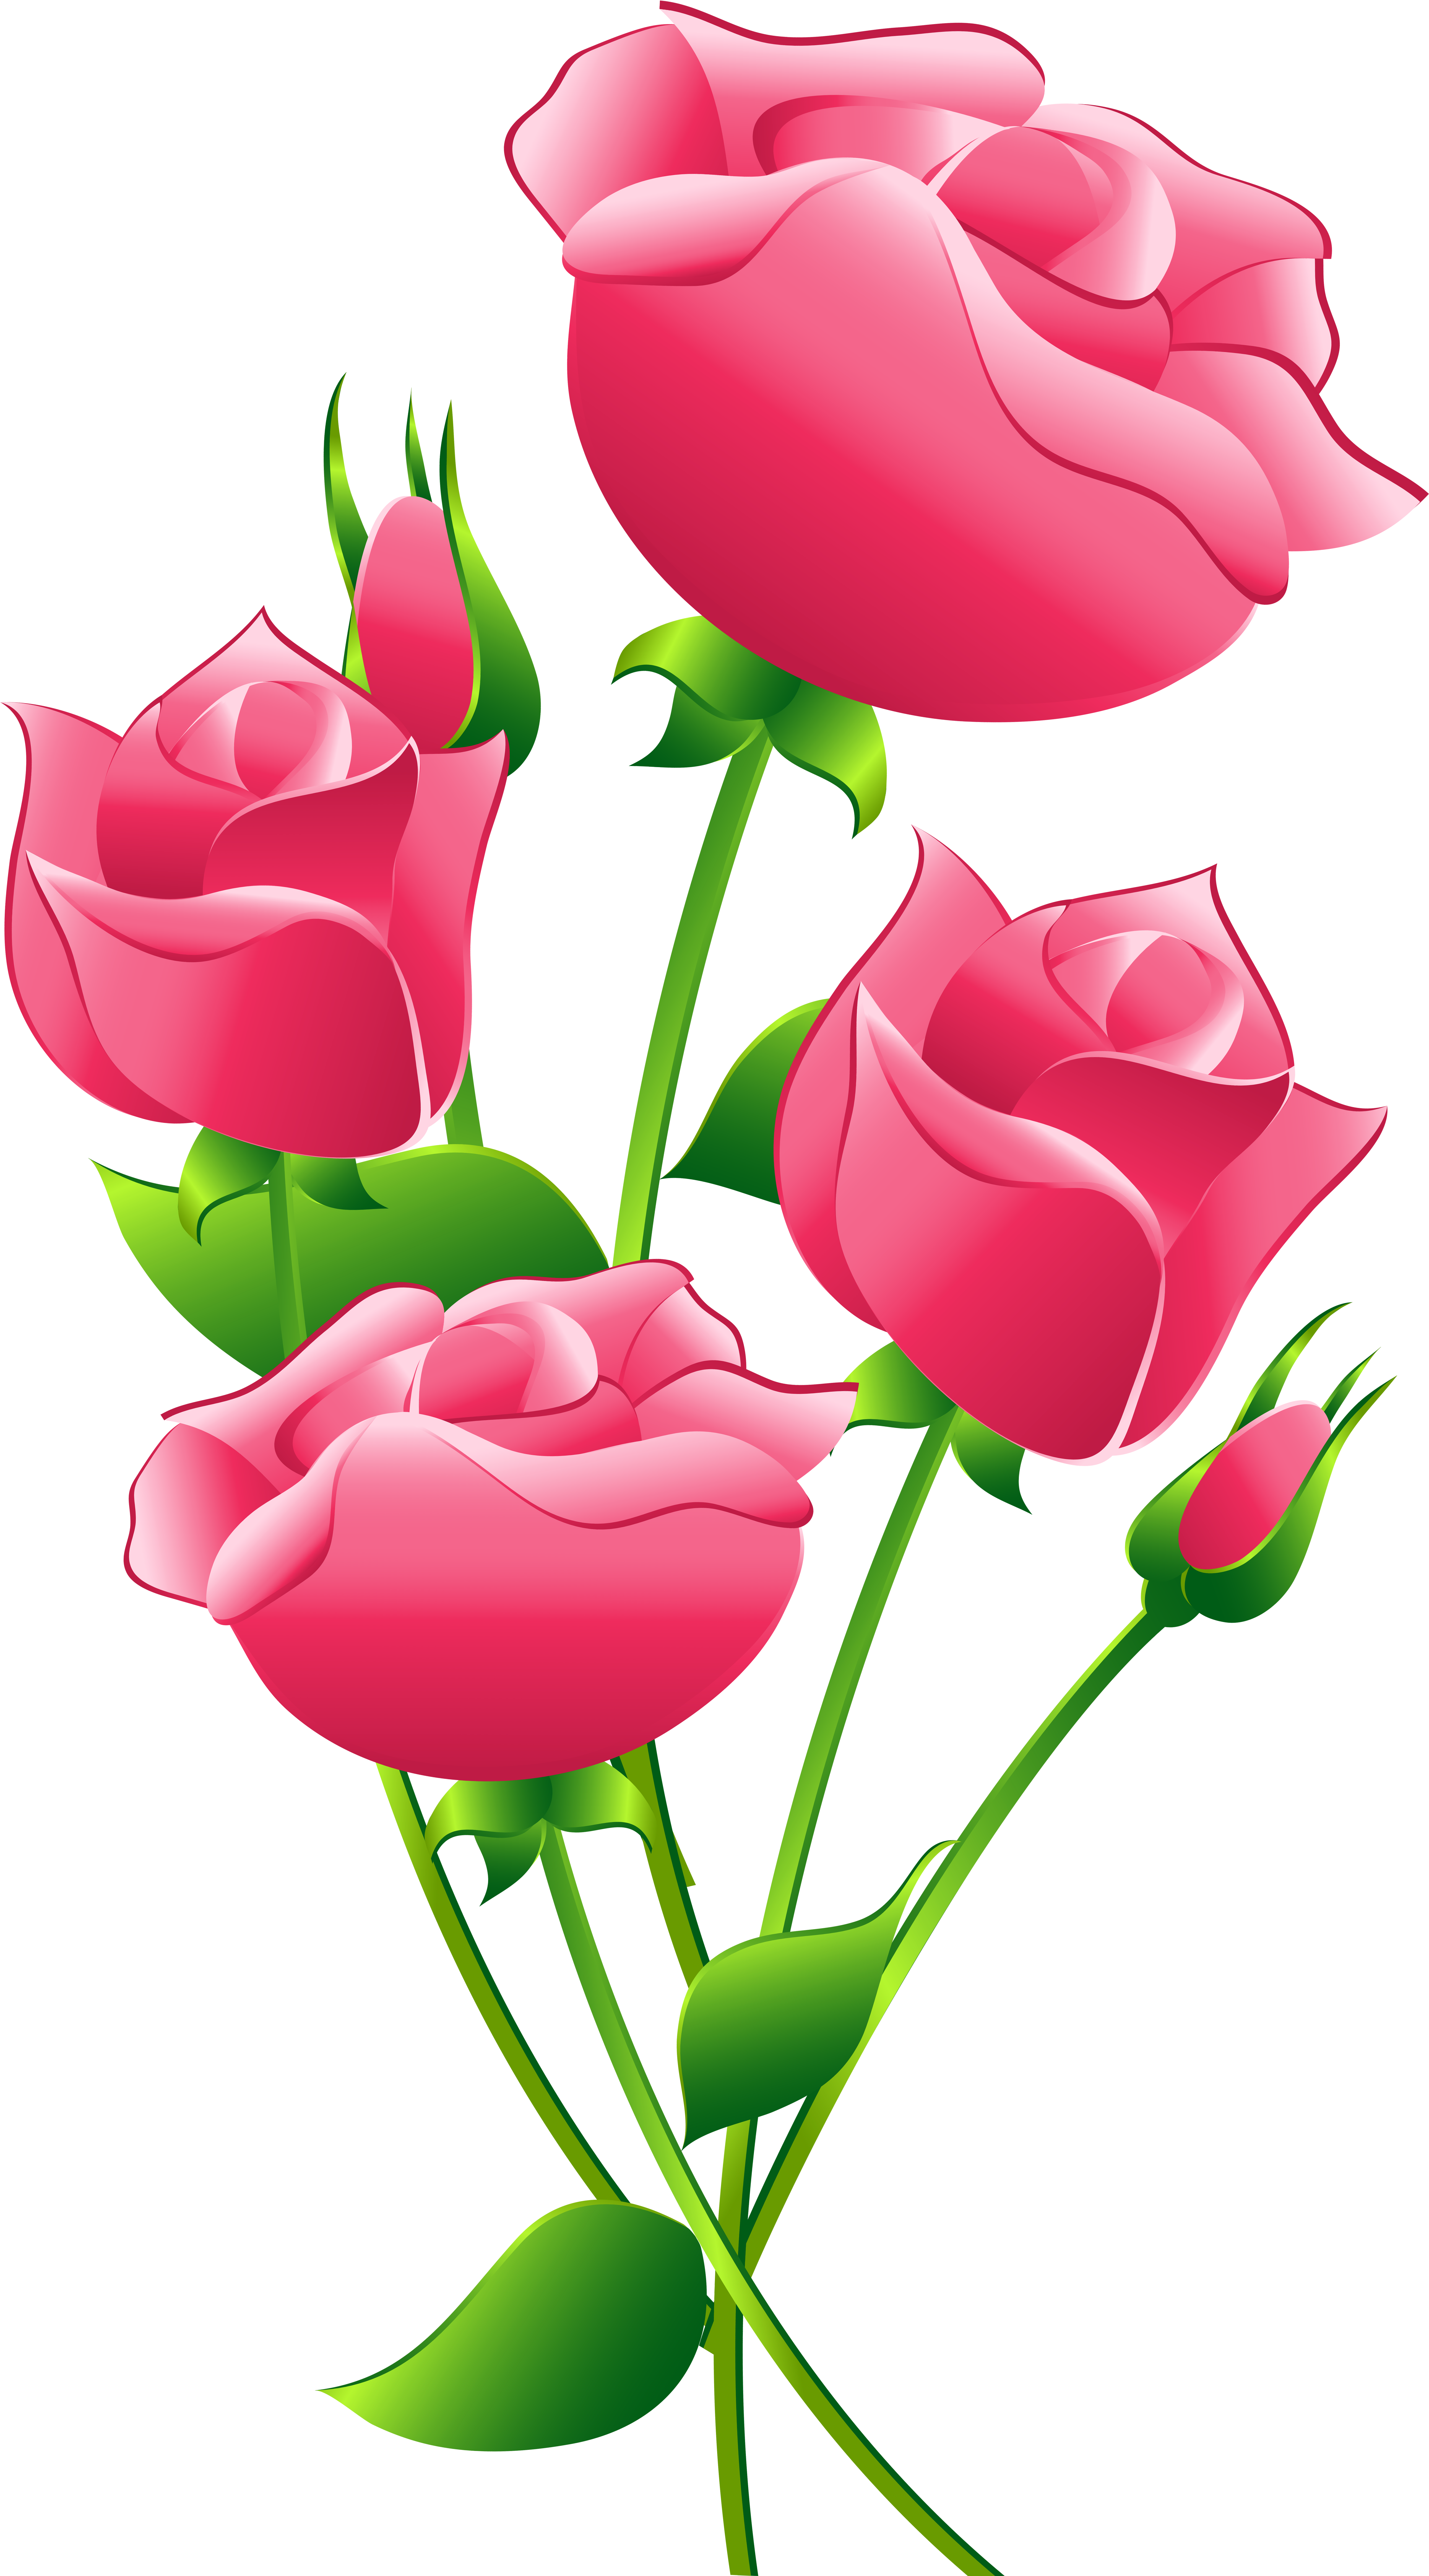 Pink Roses Transparent Clip Art Image - Pink Roses Transparent Clip Art Image (5434x9473)